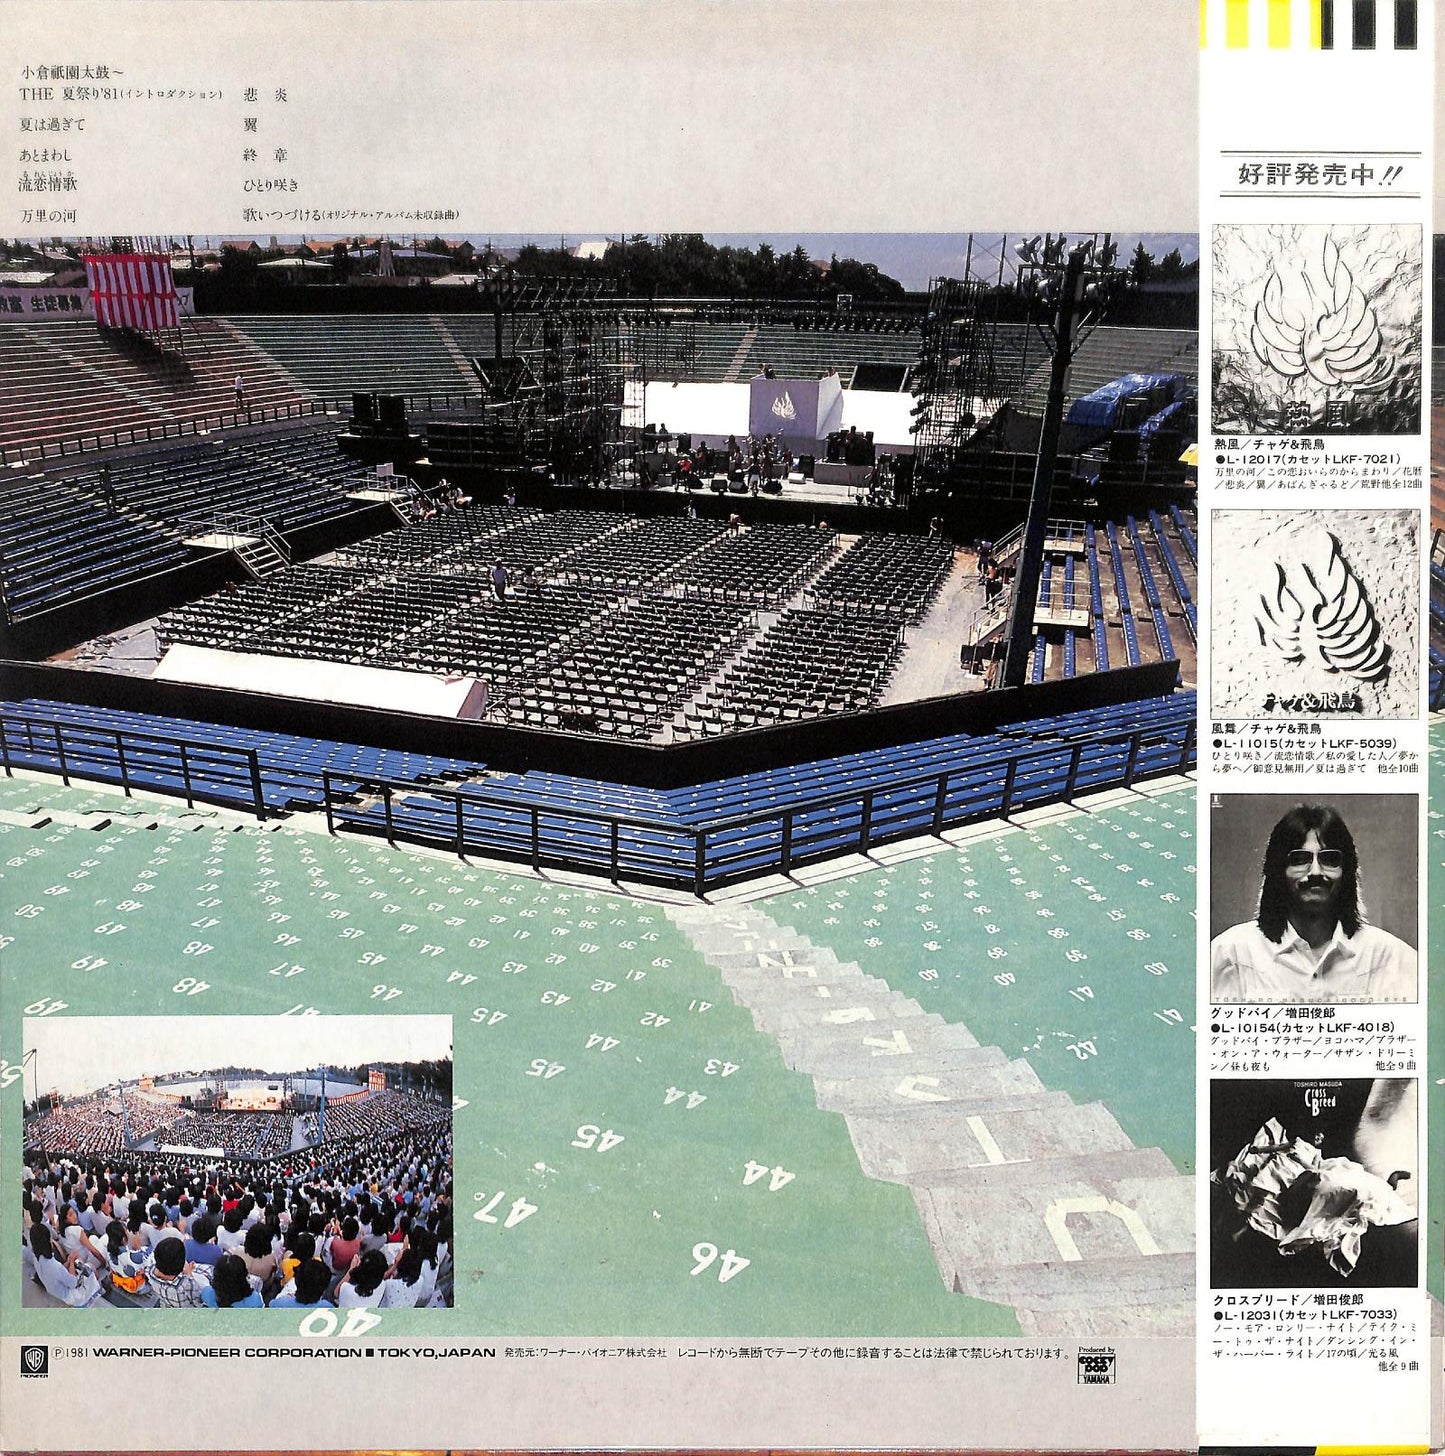 CHAGE & ASUKA - ライブ イン 田園コロシアム －The 夏祭り '81